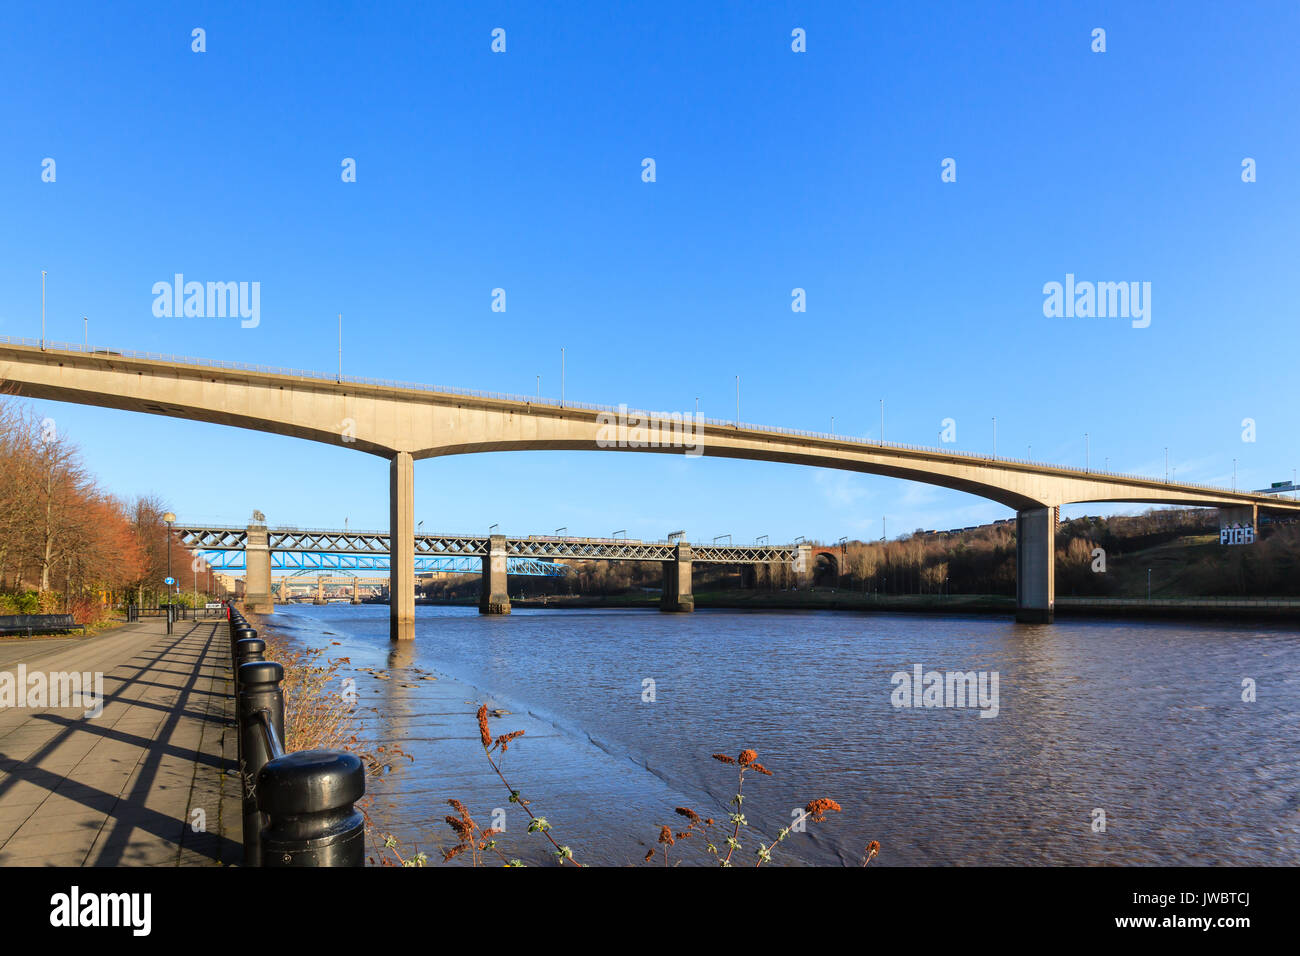 The Redheugh Bridge is a road bridge on the River Tyne, England, connecting Newcastle upon Tyne and Gateshead. Stock Photo